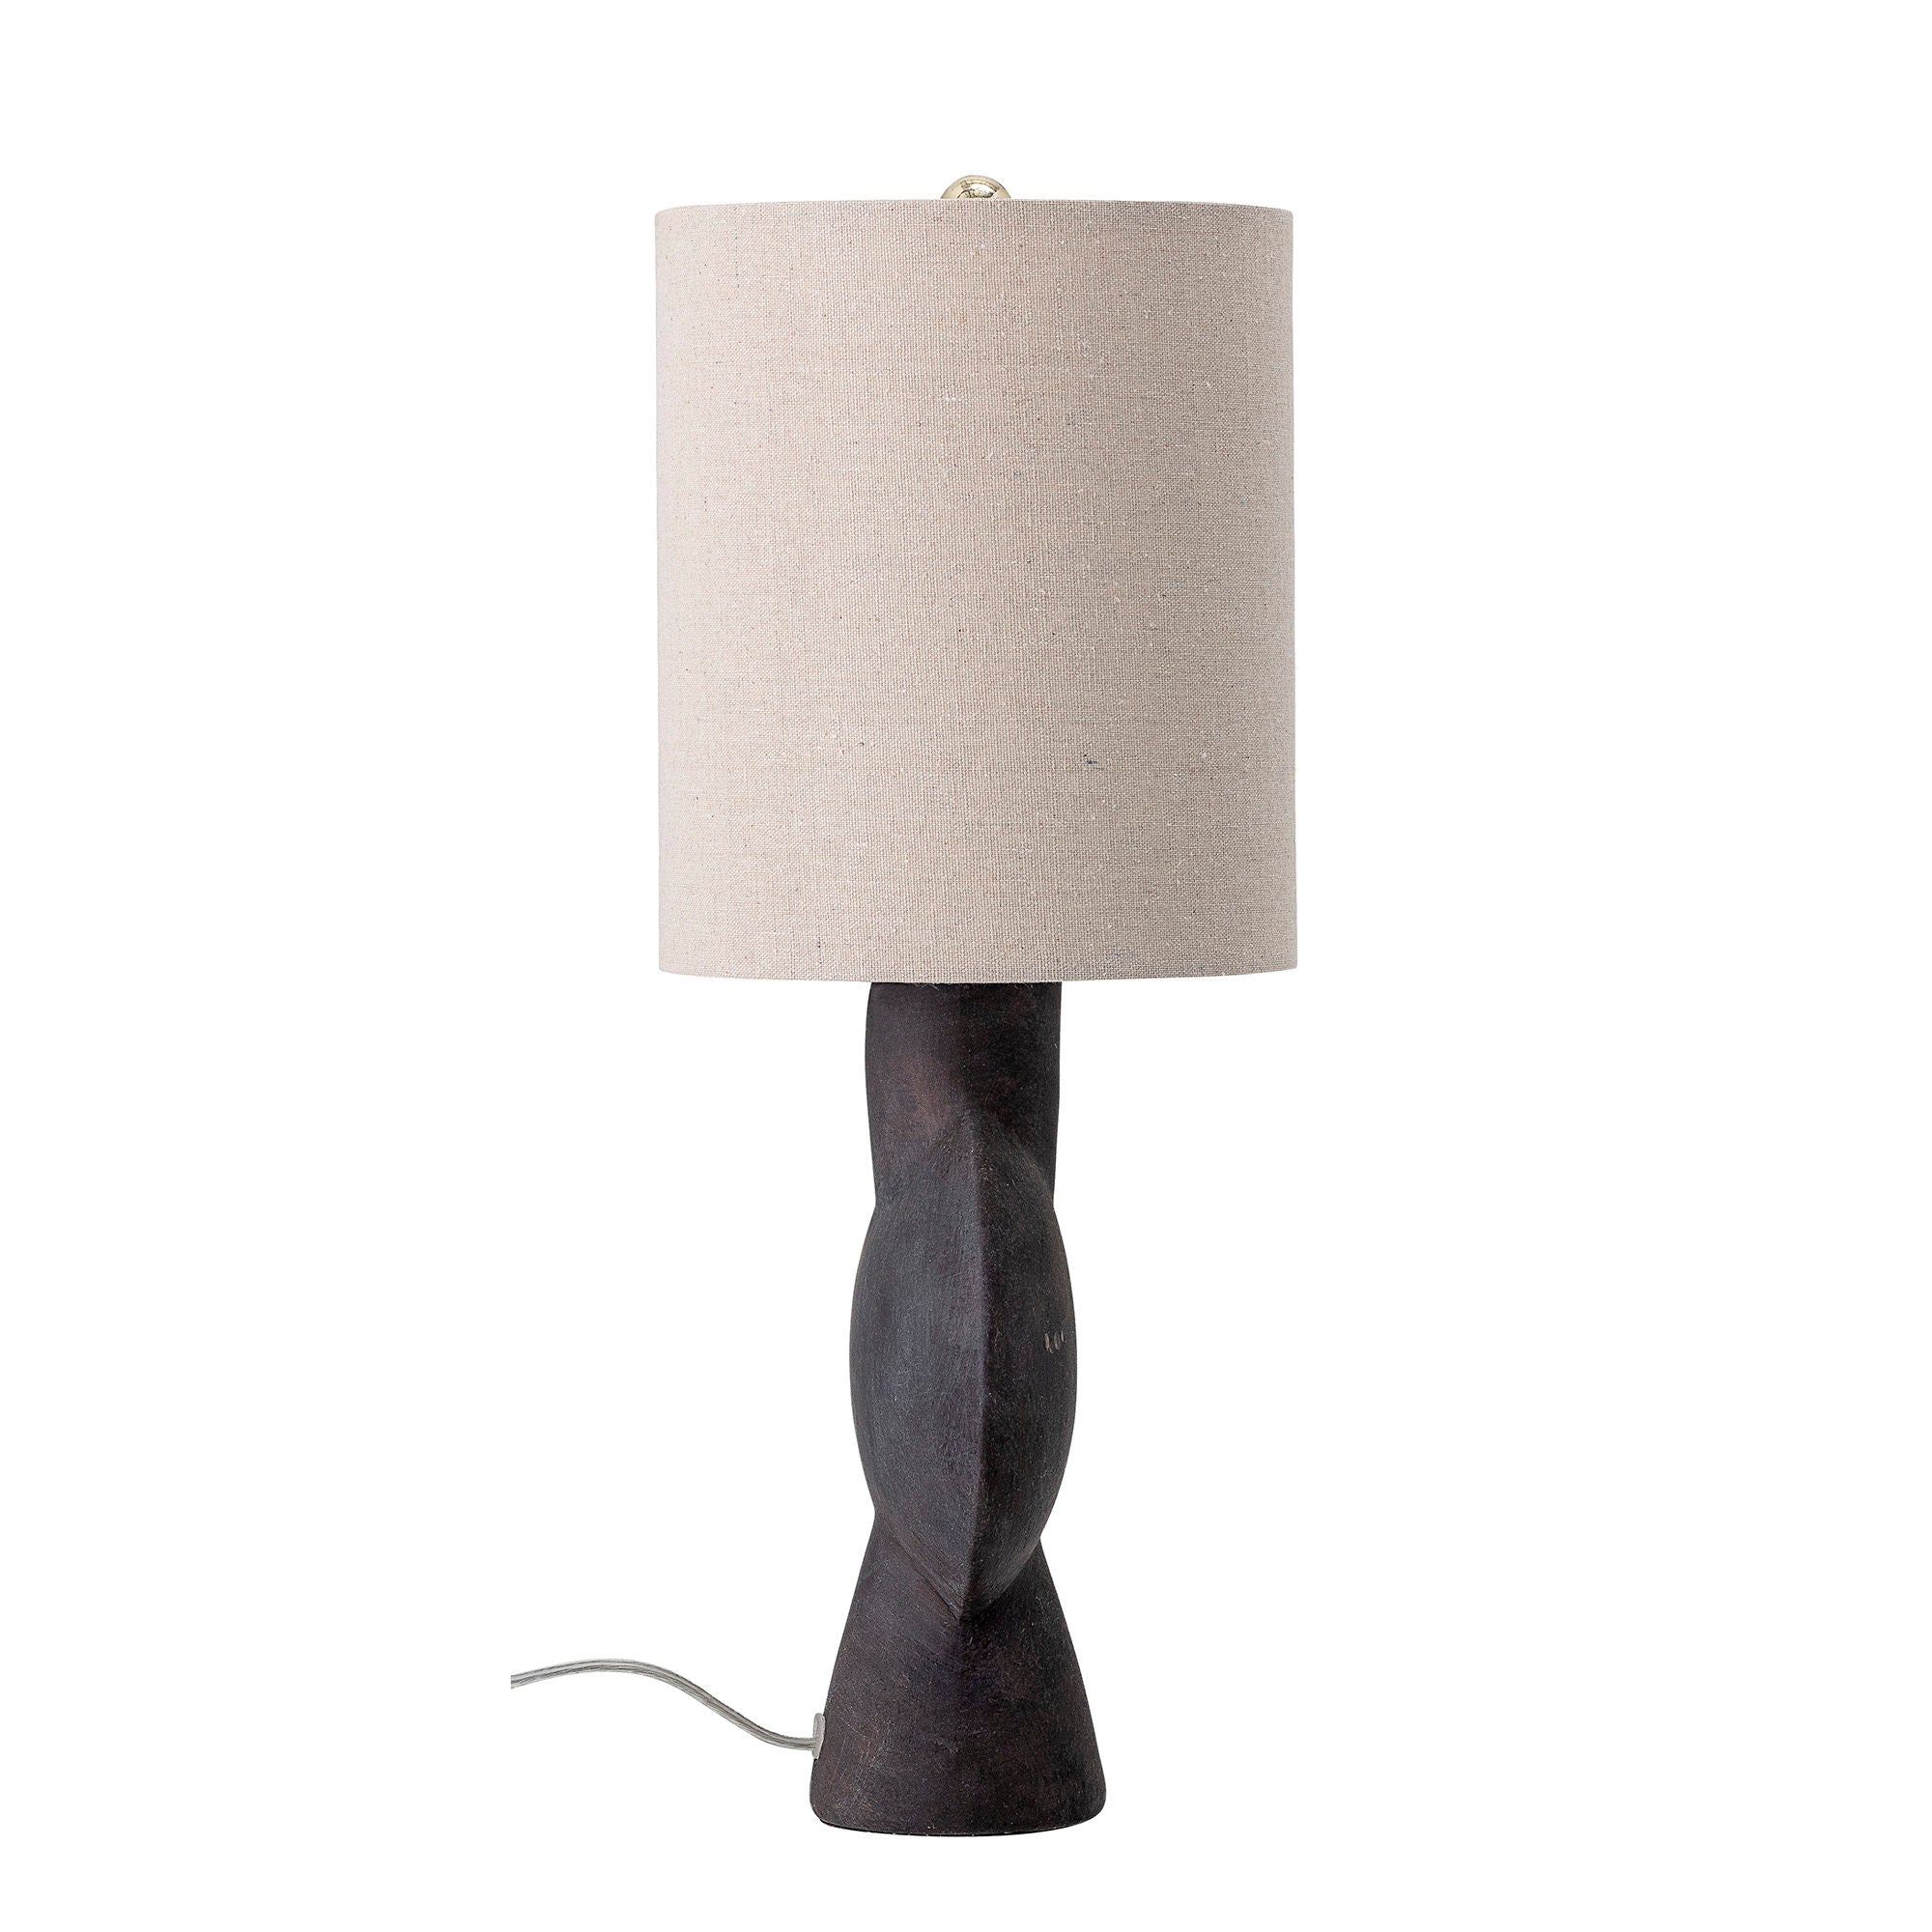 Bloomingville Sergio Table lamp, Brown, Terracotta